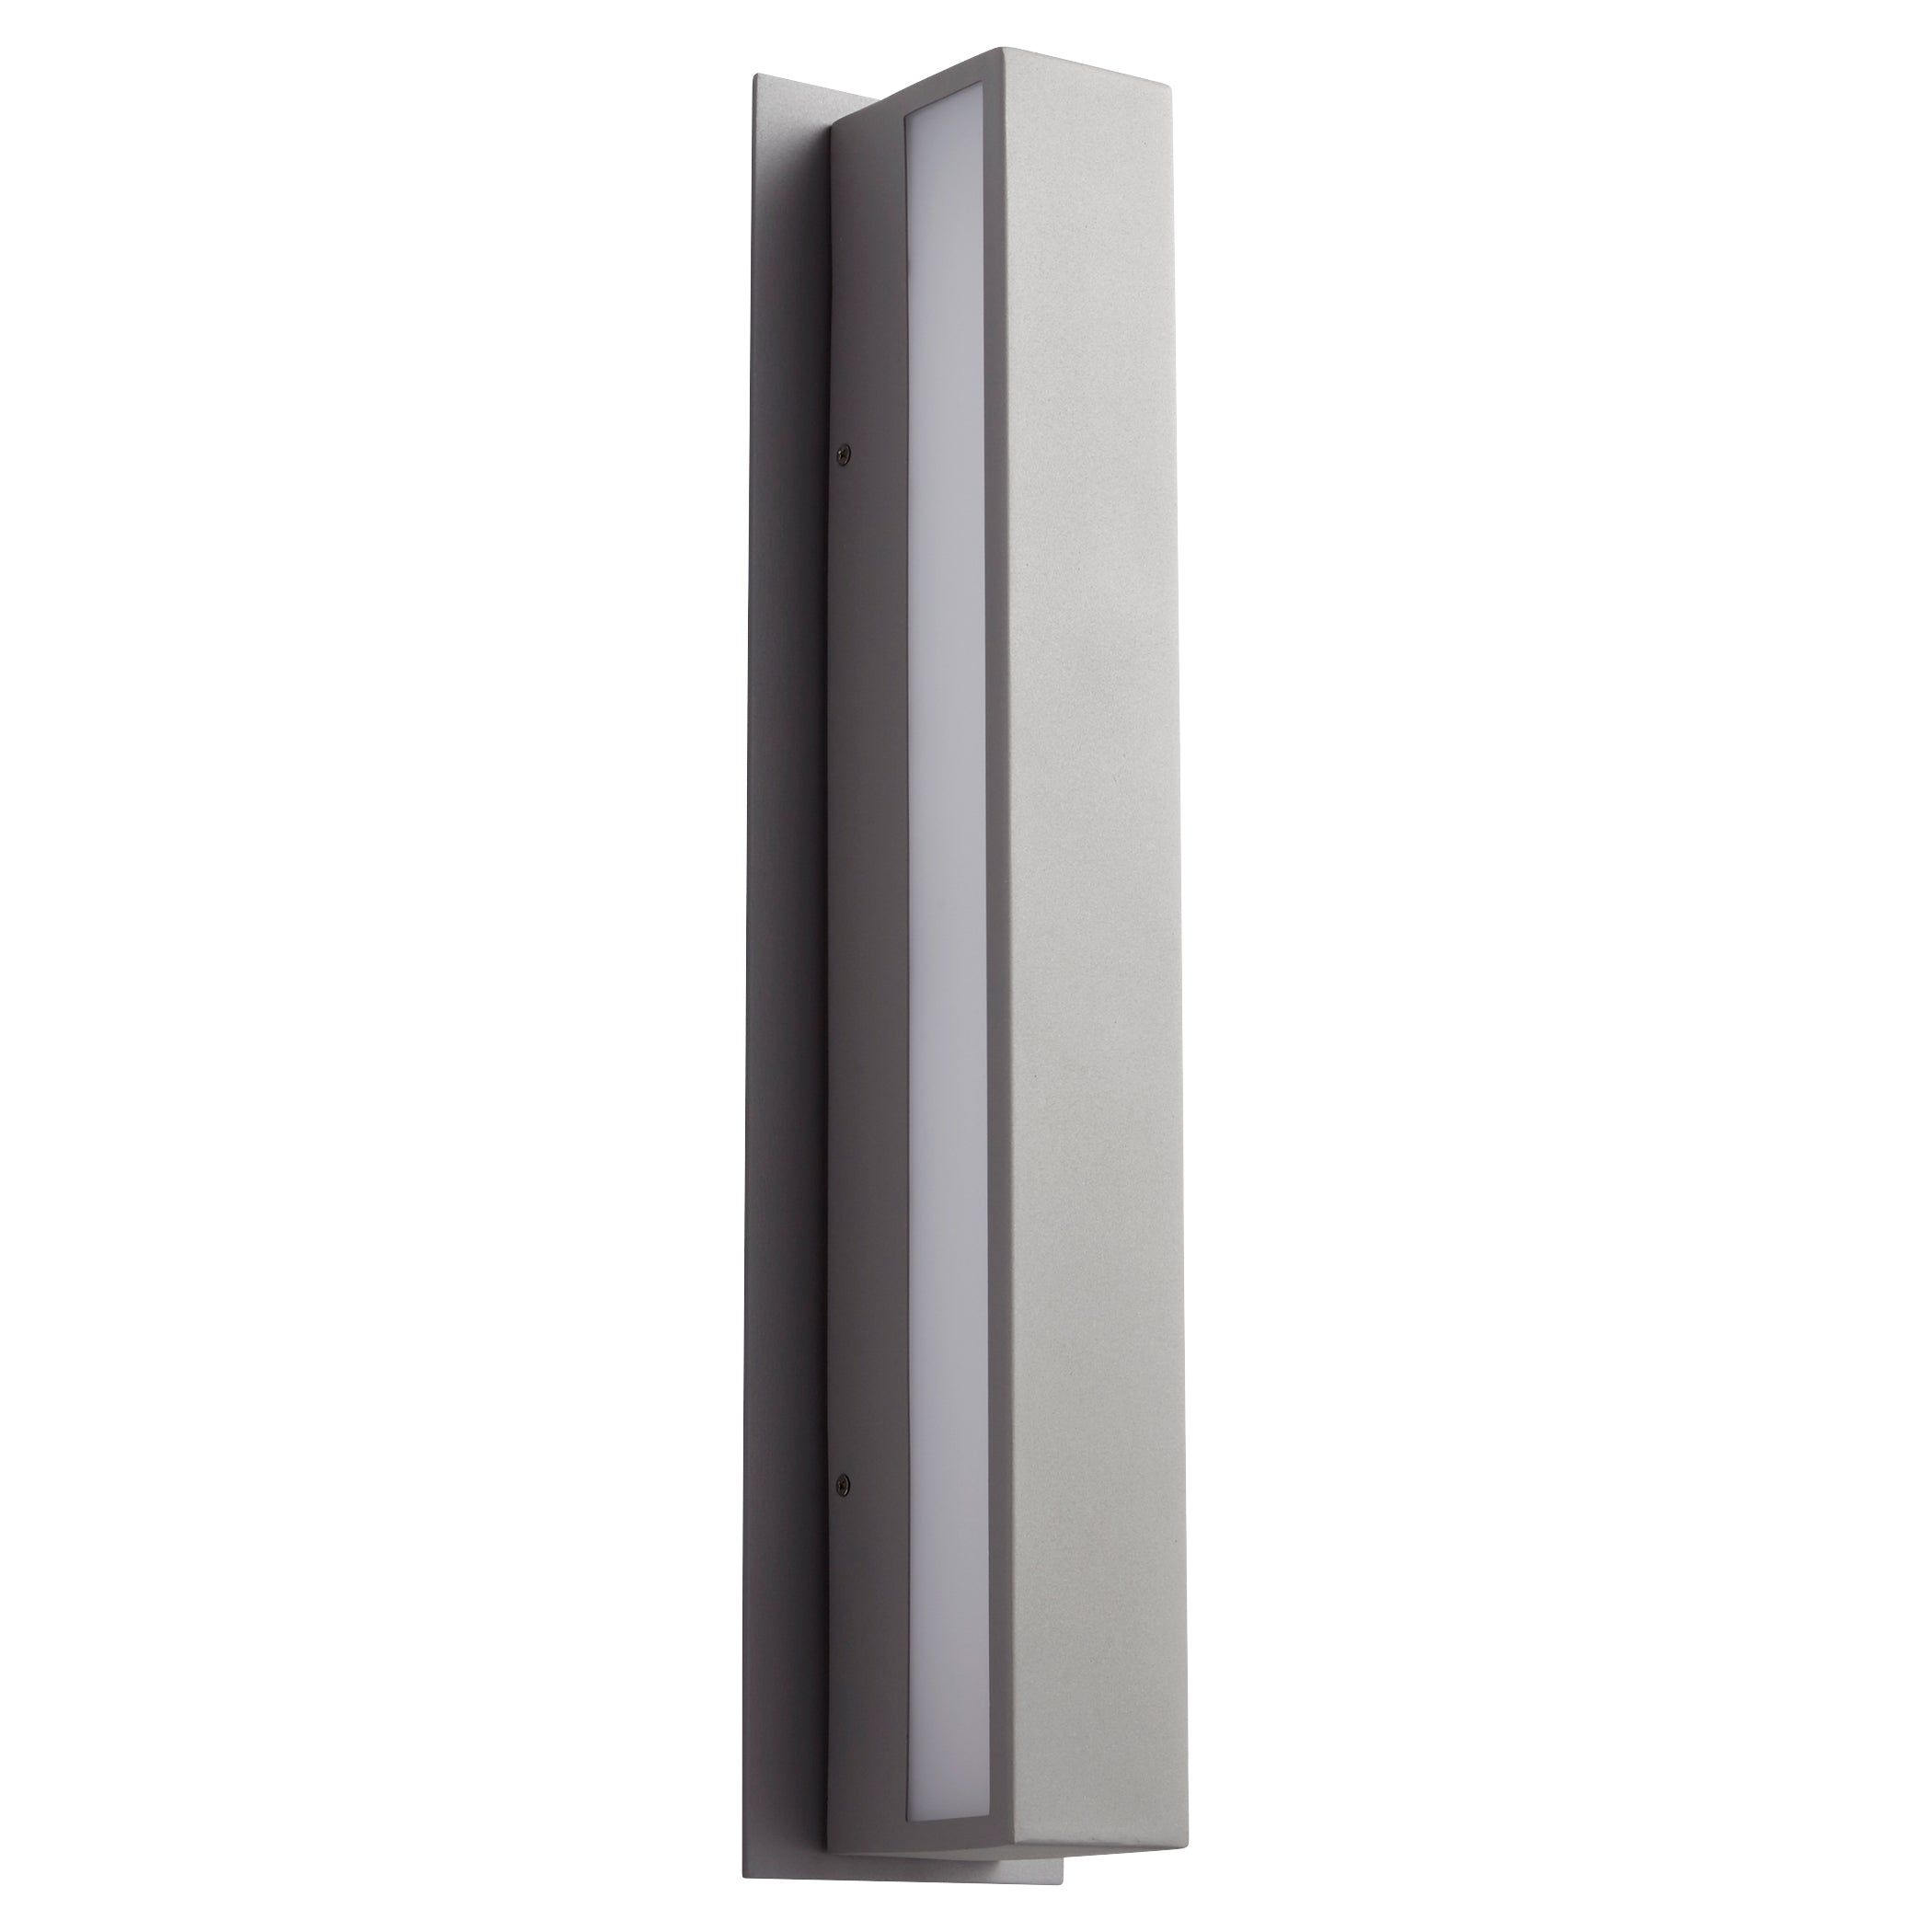 Oxygen MAIA 3-742-16 Outdoor Wall Light Fixture, 24 Inch - Grey